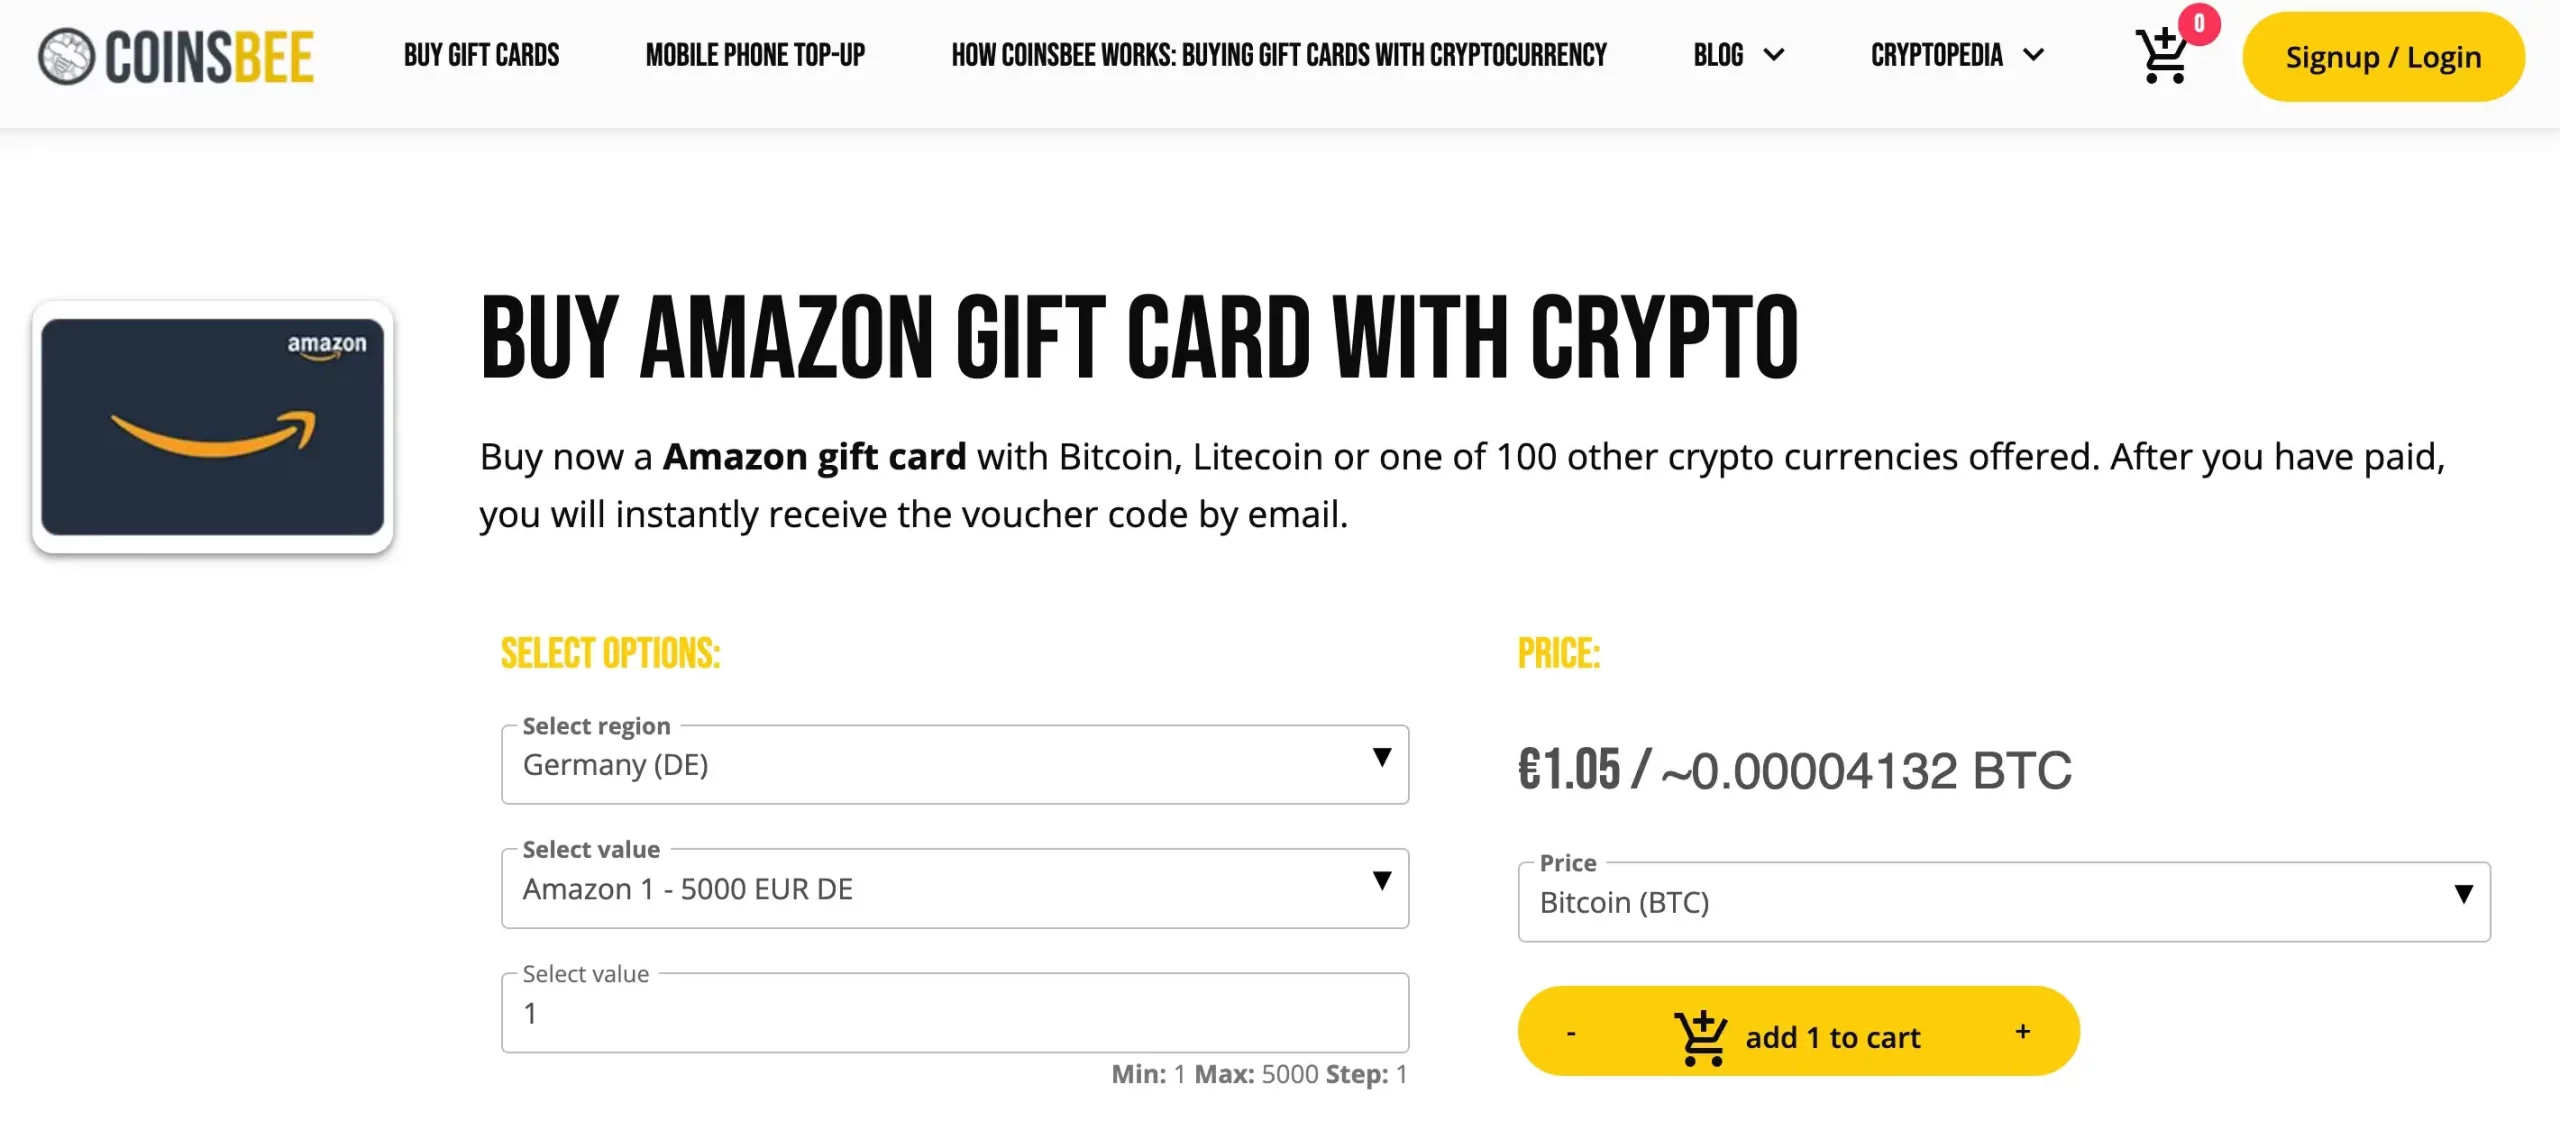 Buy Amazon Gift Card with Crypto